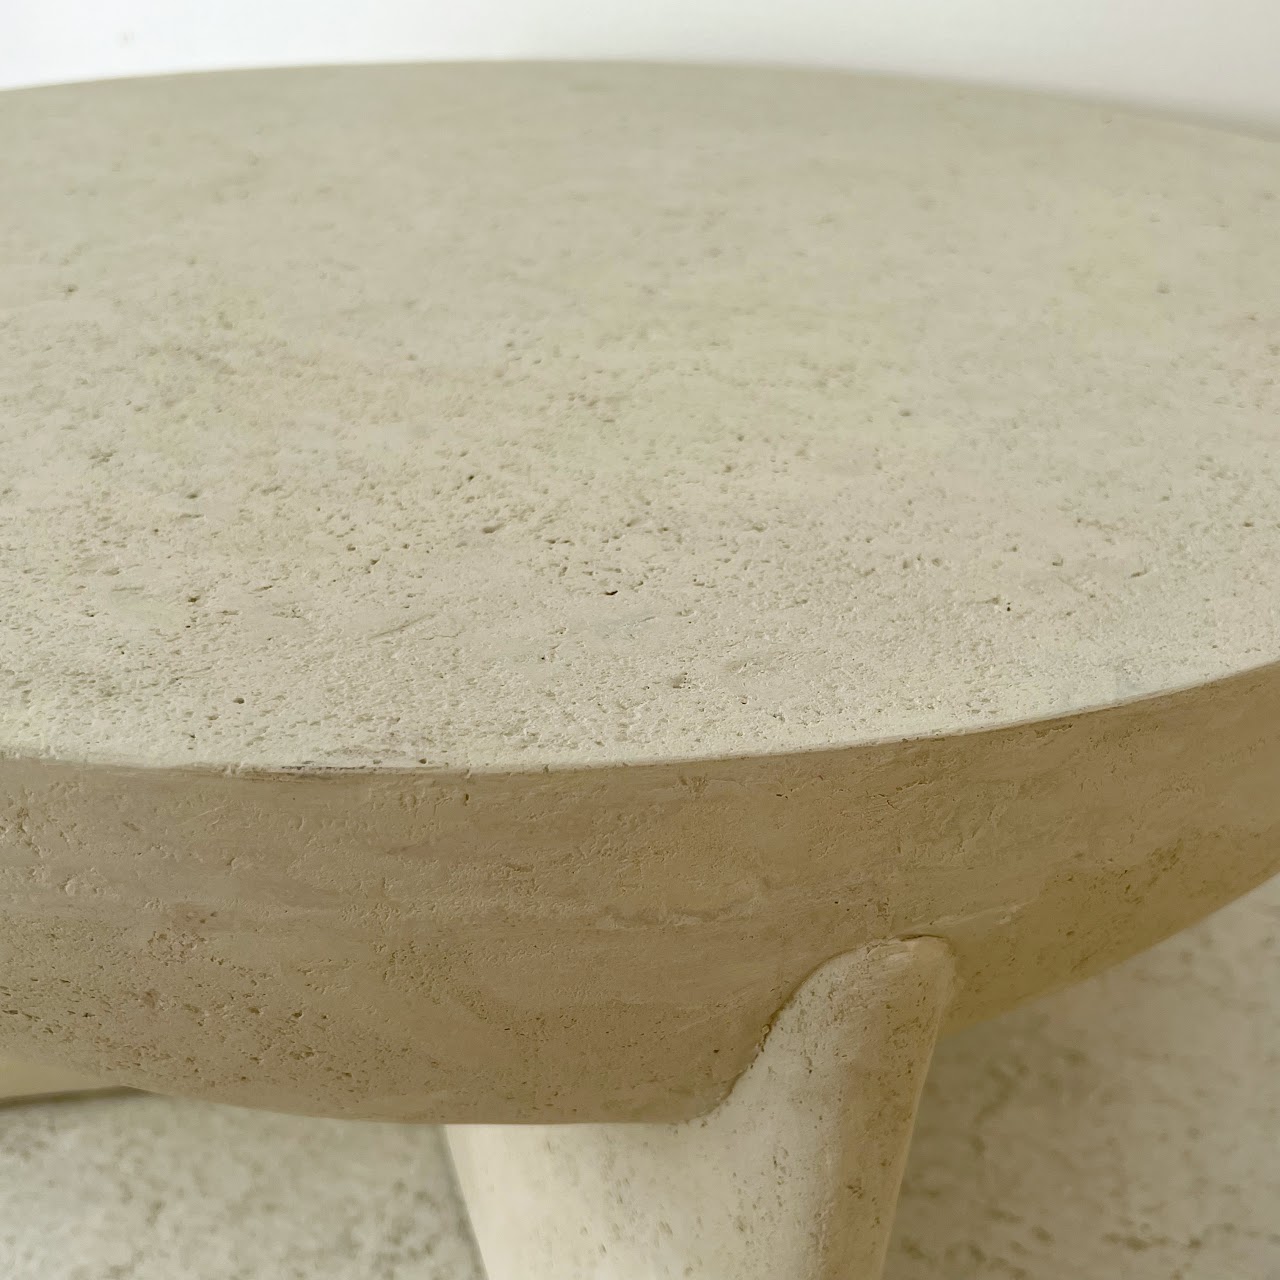 Lava Stone Sculptural Coffee Table